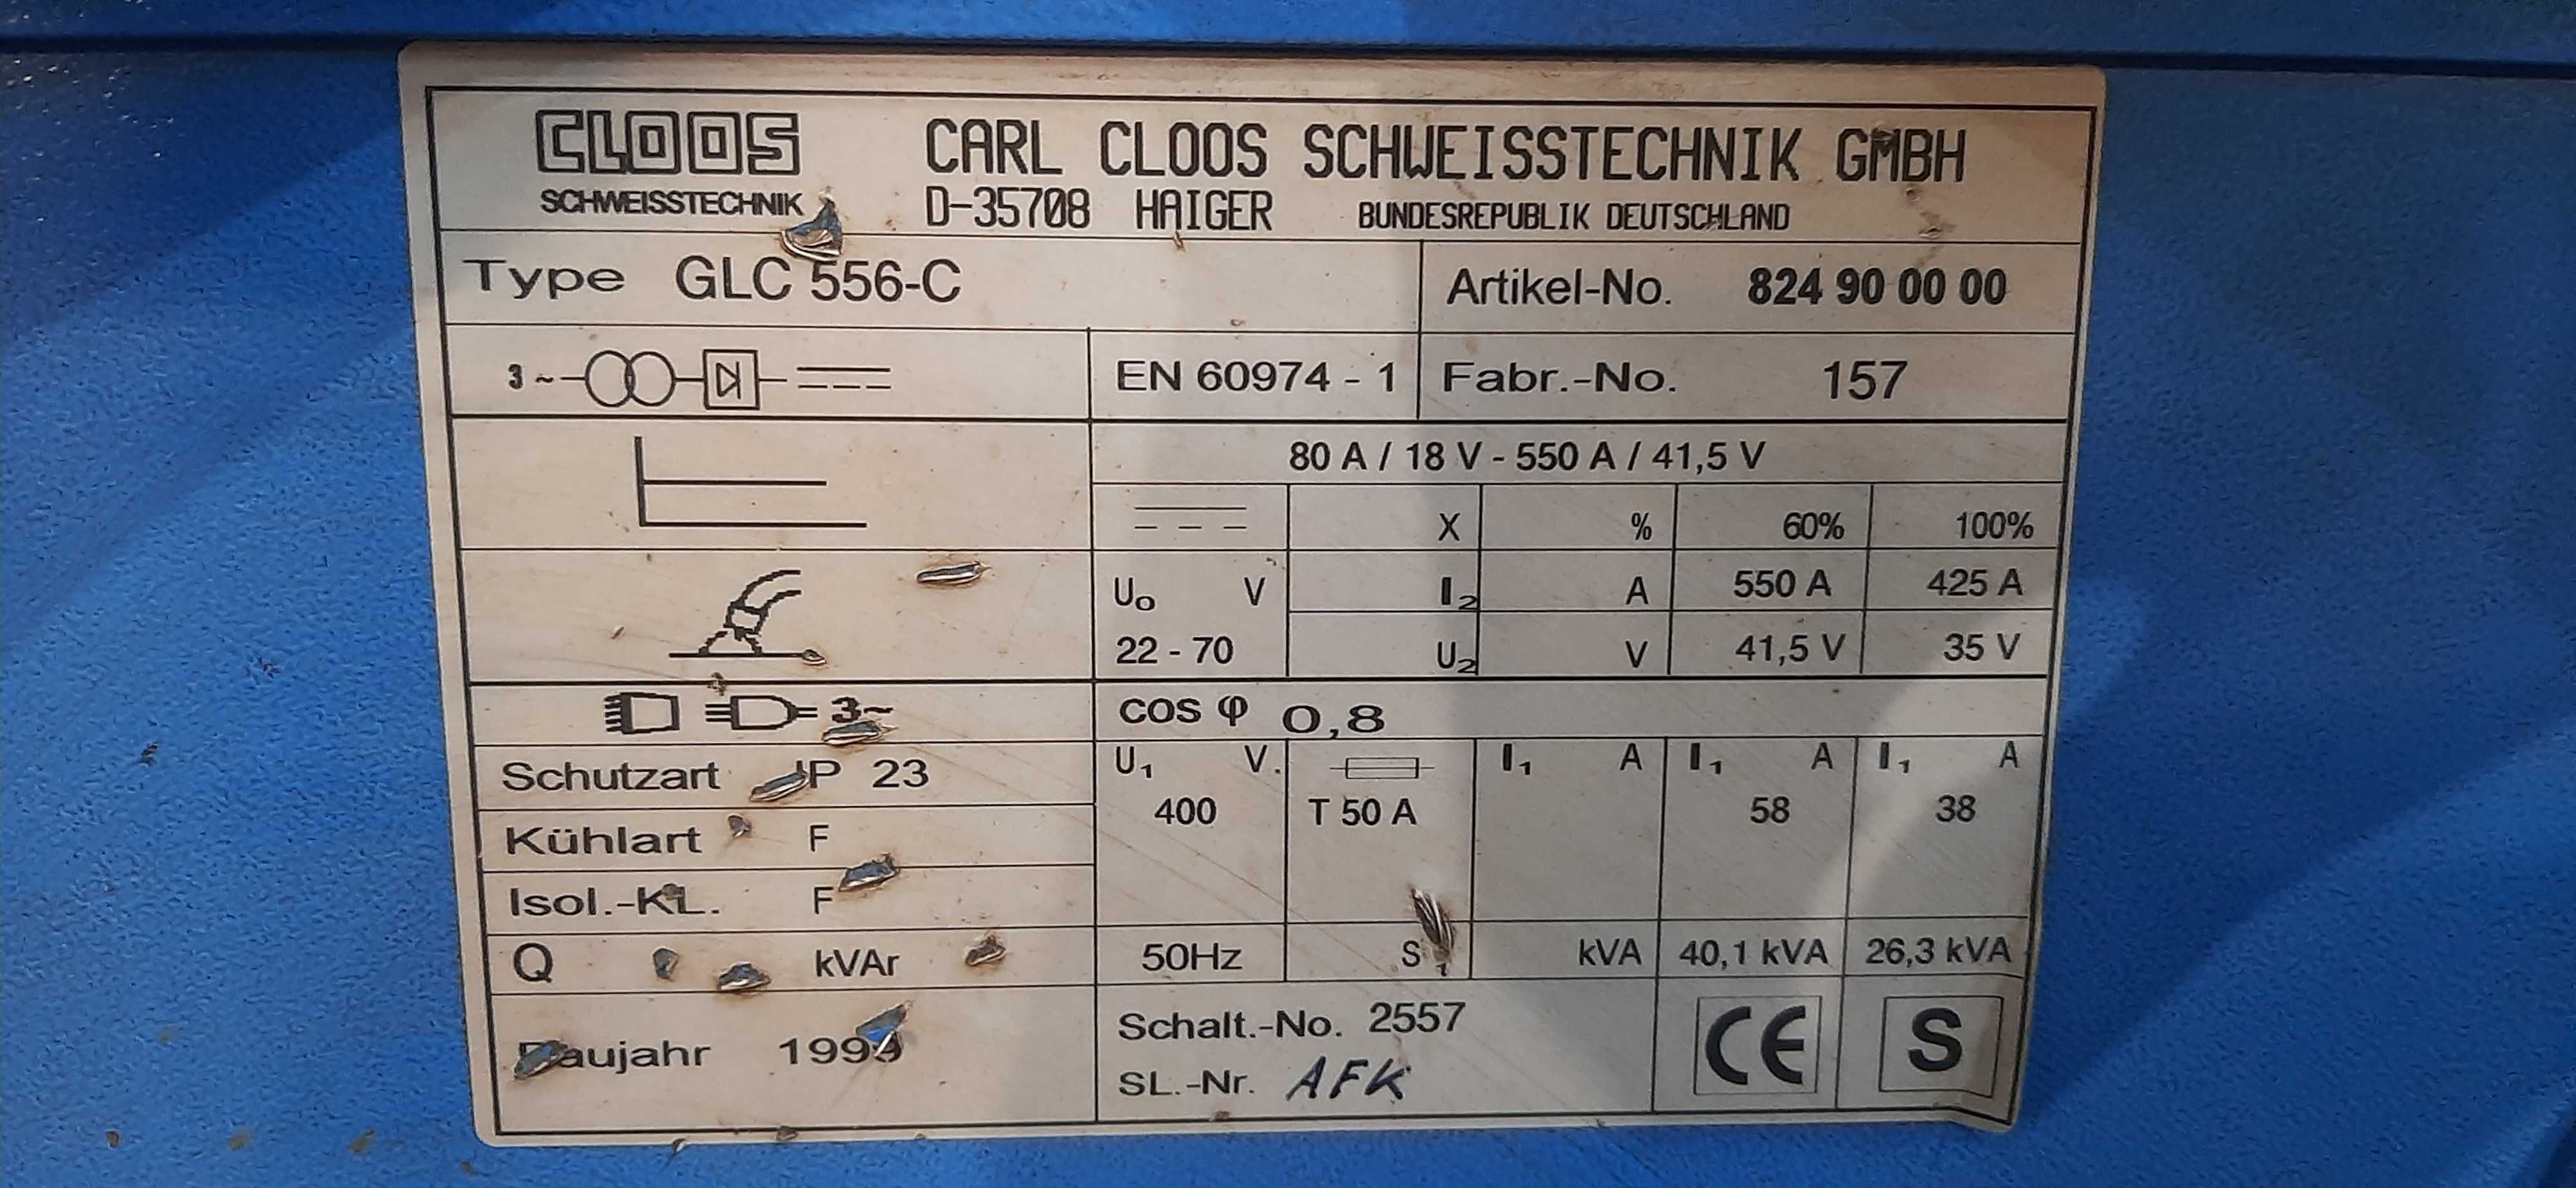 spawarka Cloos GLC 556 - C